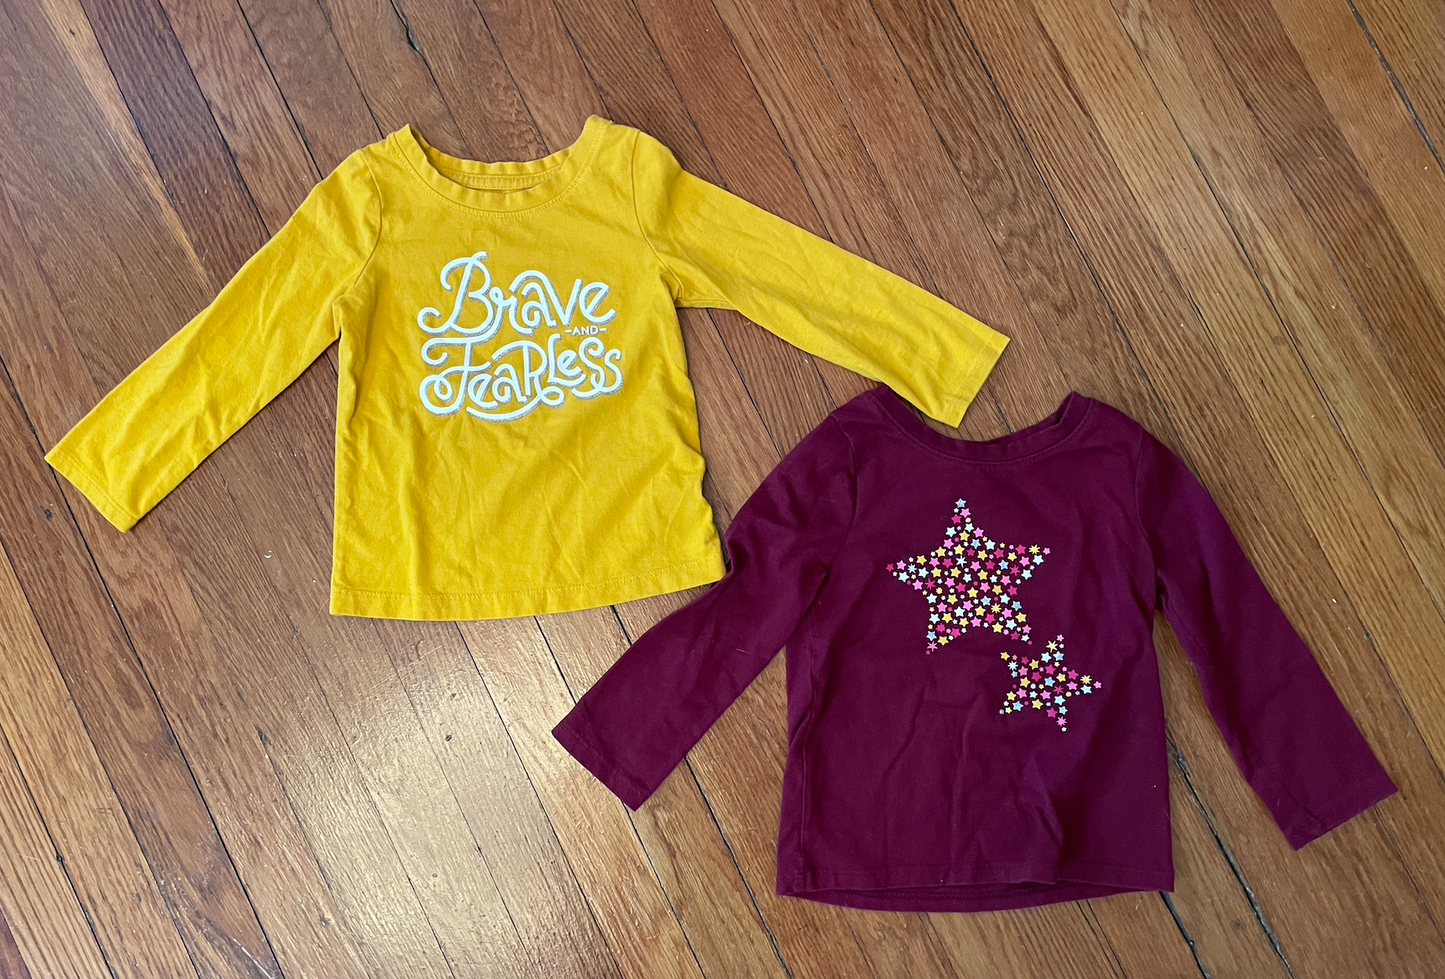 Cat and Jack long sleeve shirt bundle - girls size 2T - mustard and maroon shirts - EUC